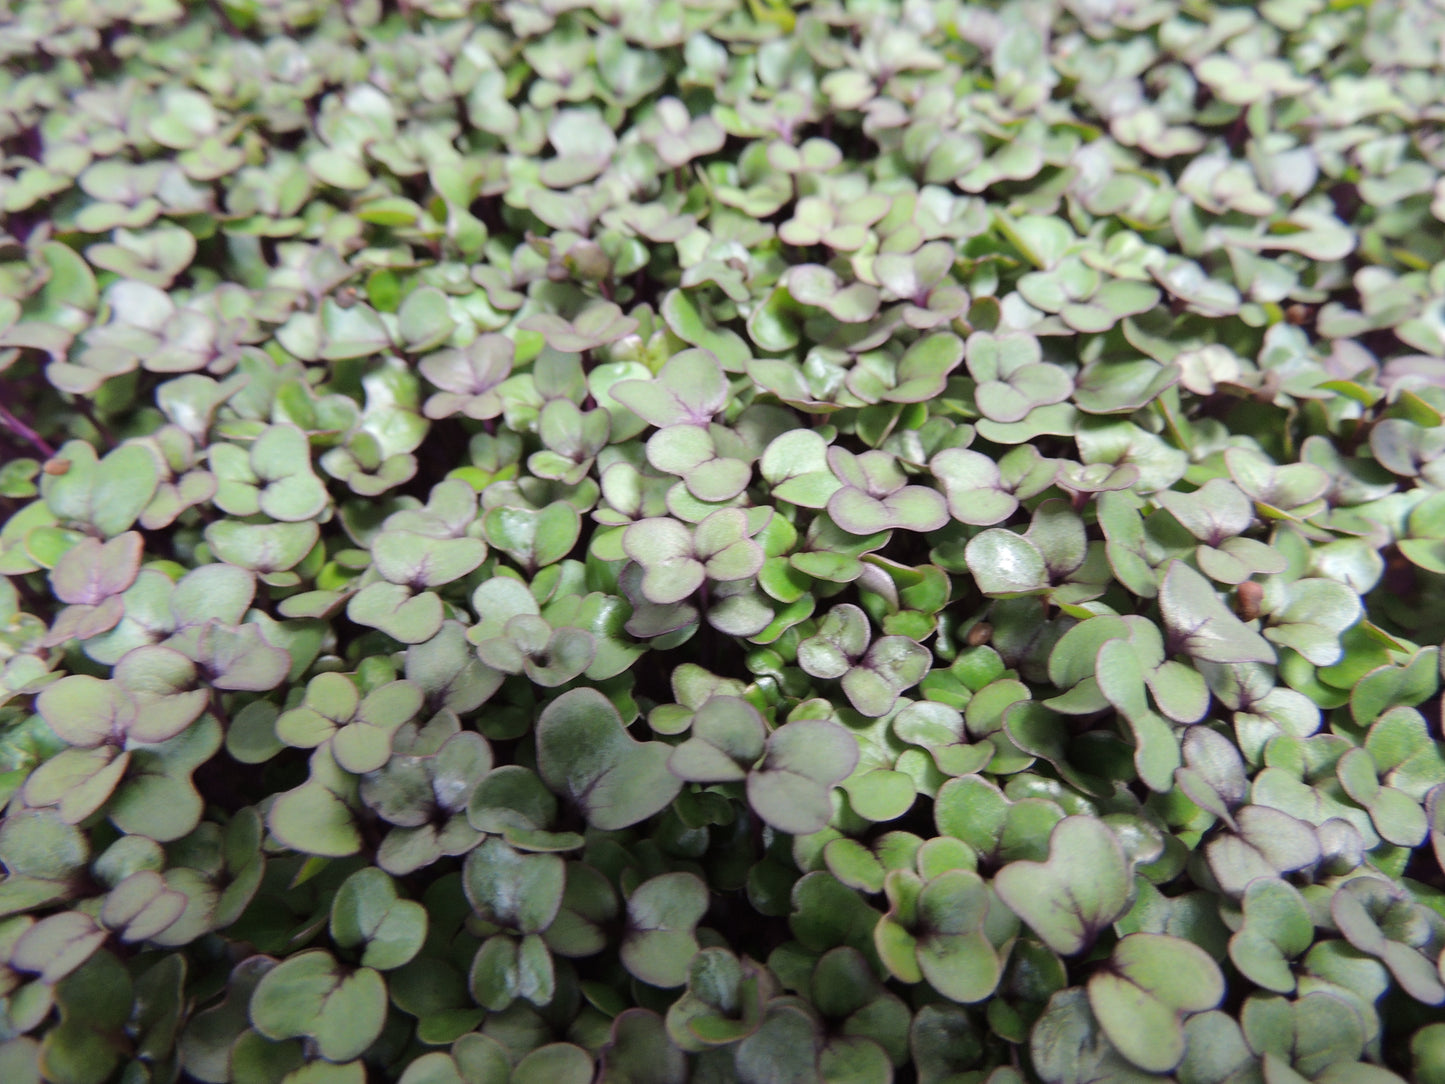 Purple Kohlrabi Microgreens